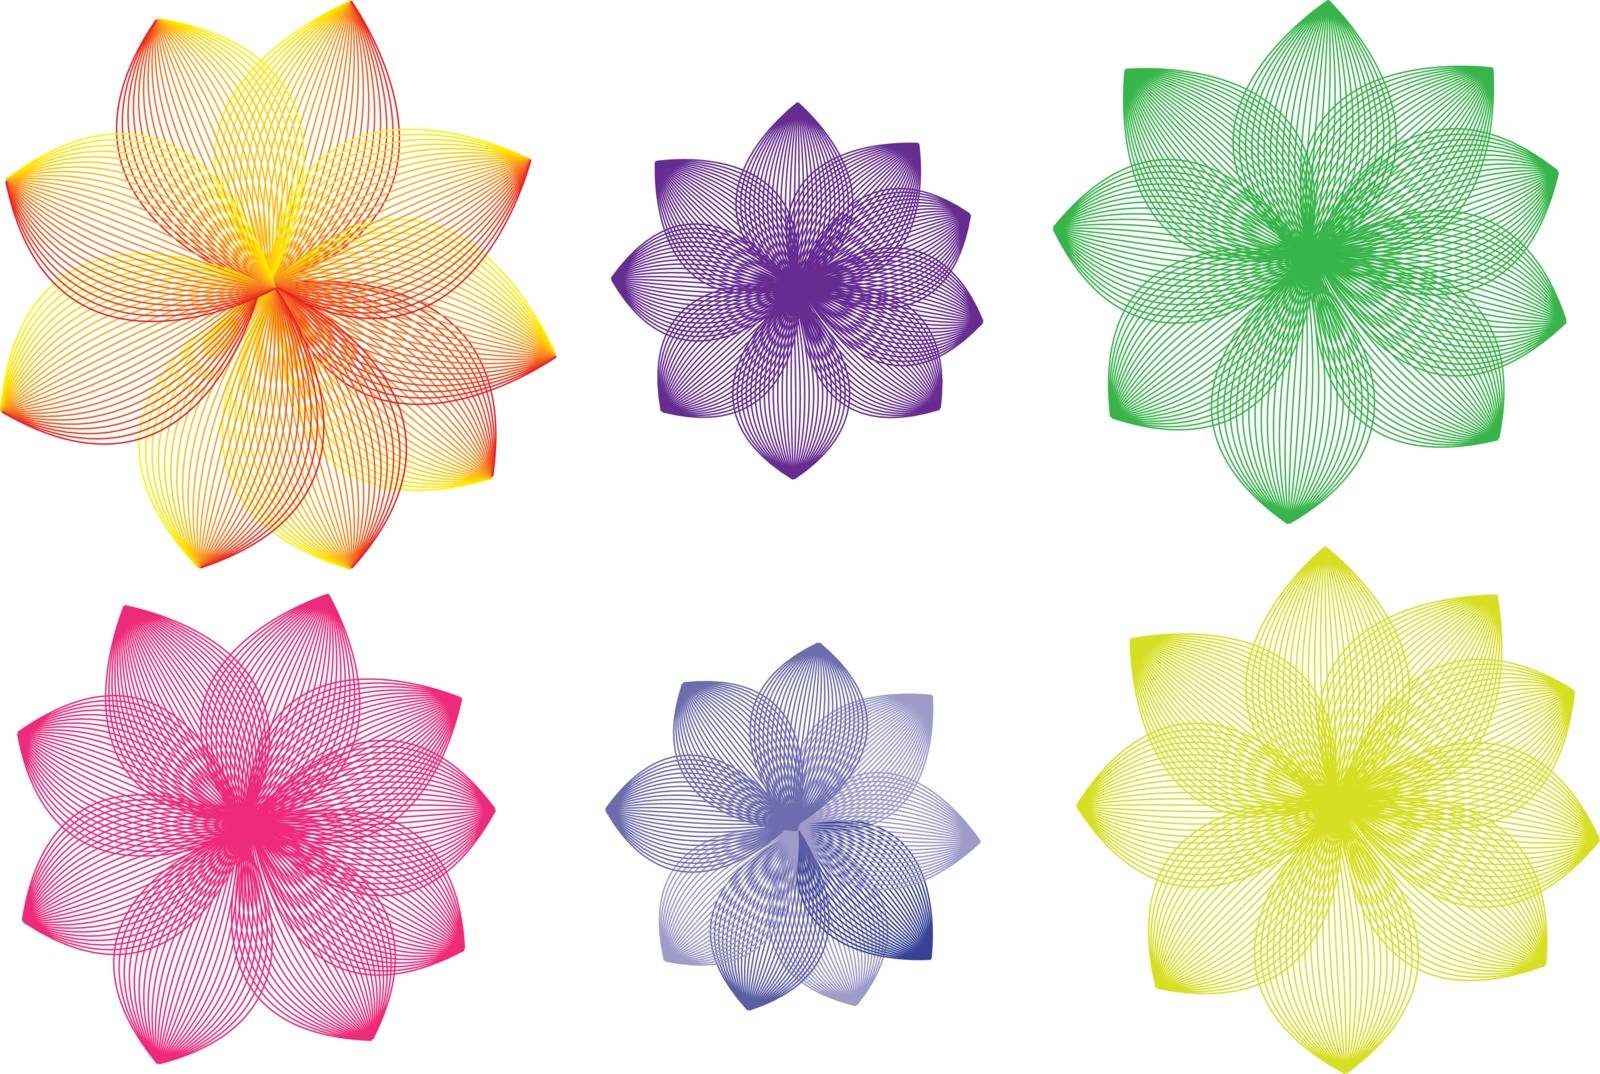 Floral variations by hamik